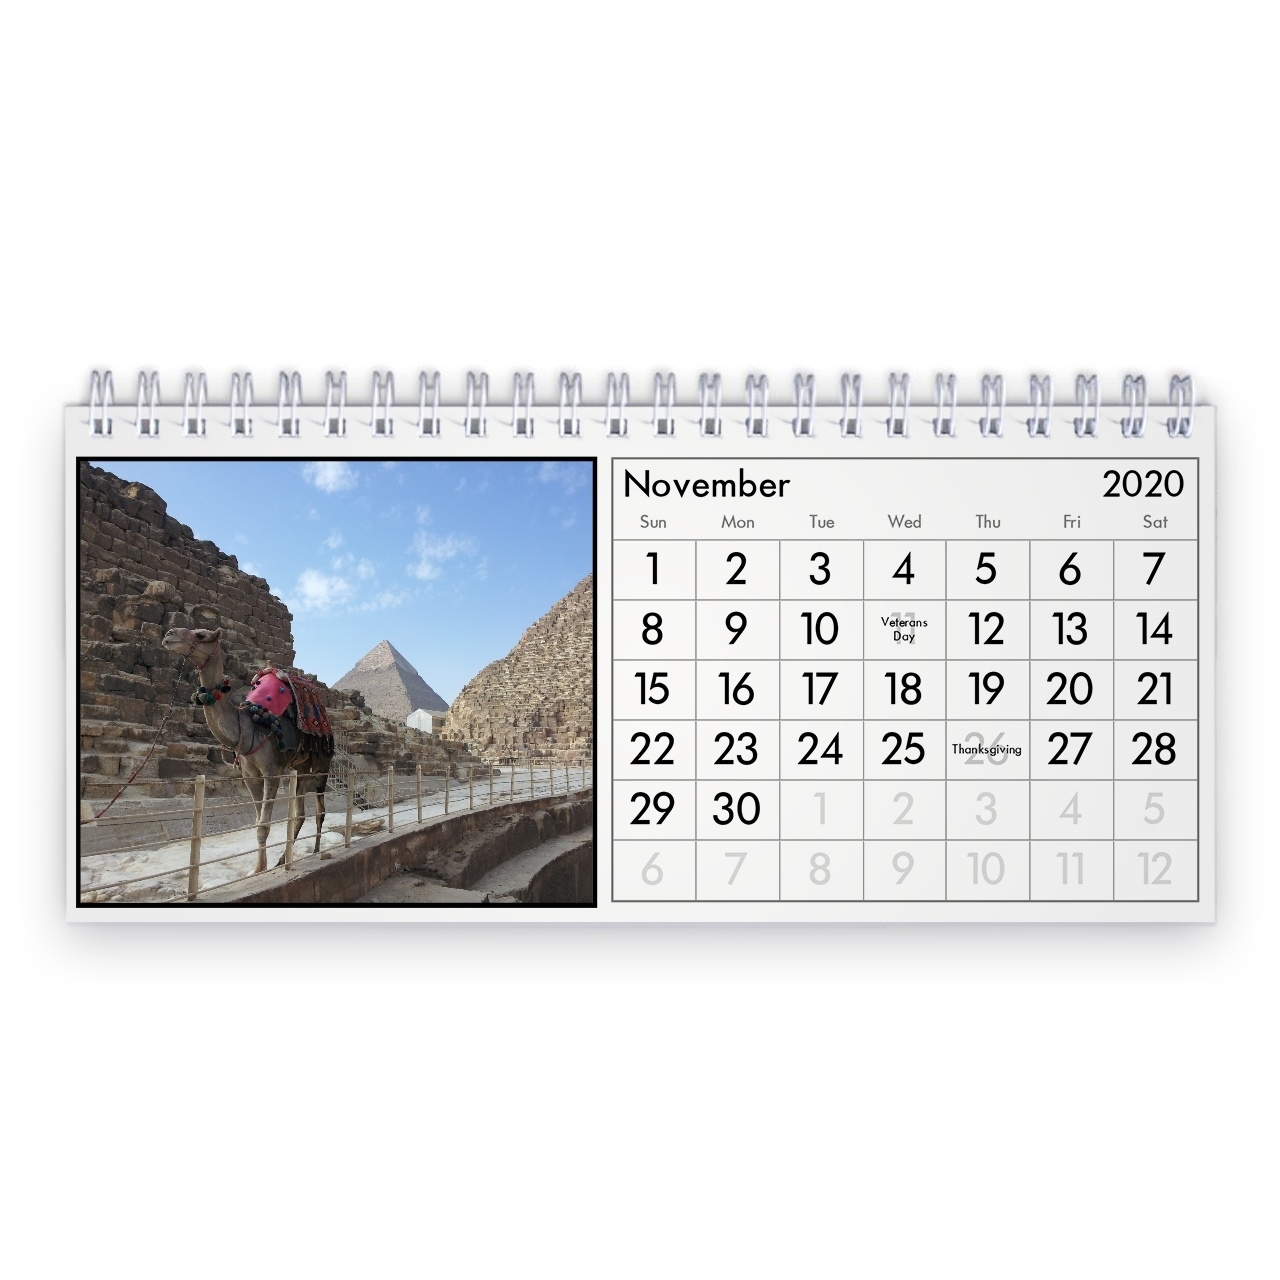 Egypt 2021 Desk Calendar Show Me A Calendar Of August 2021